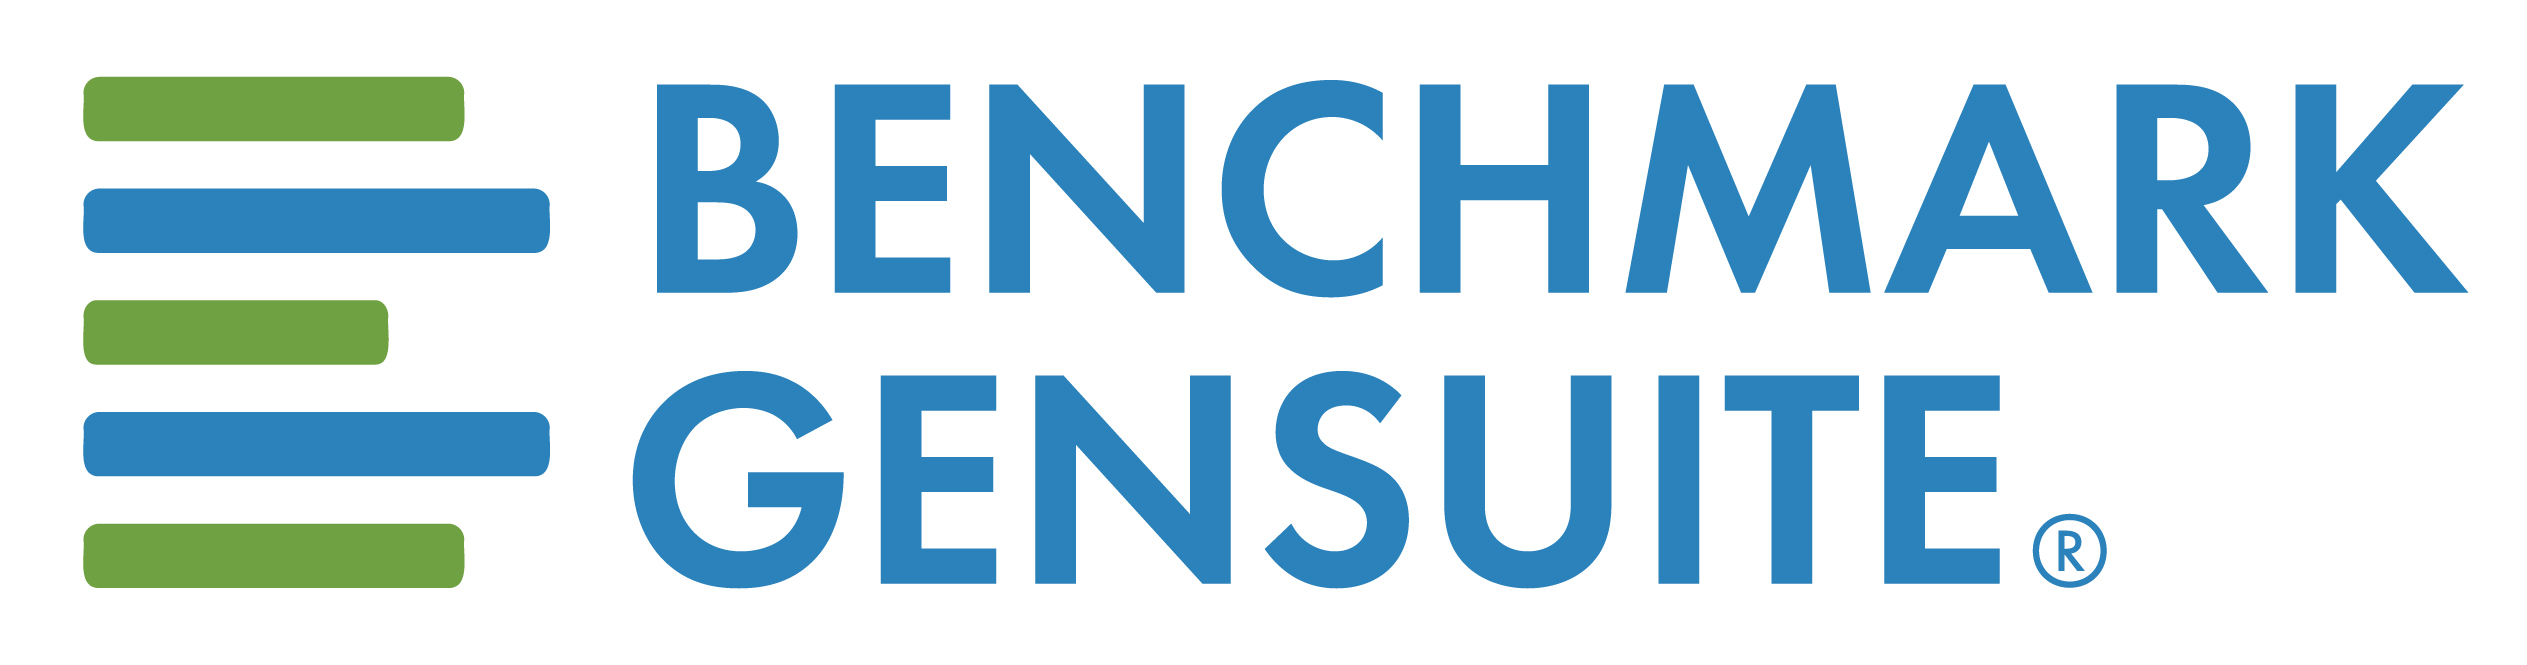 Benchmark Gensuite Logo